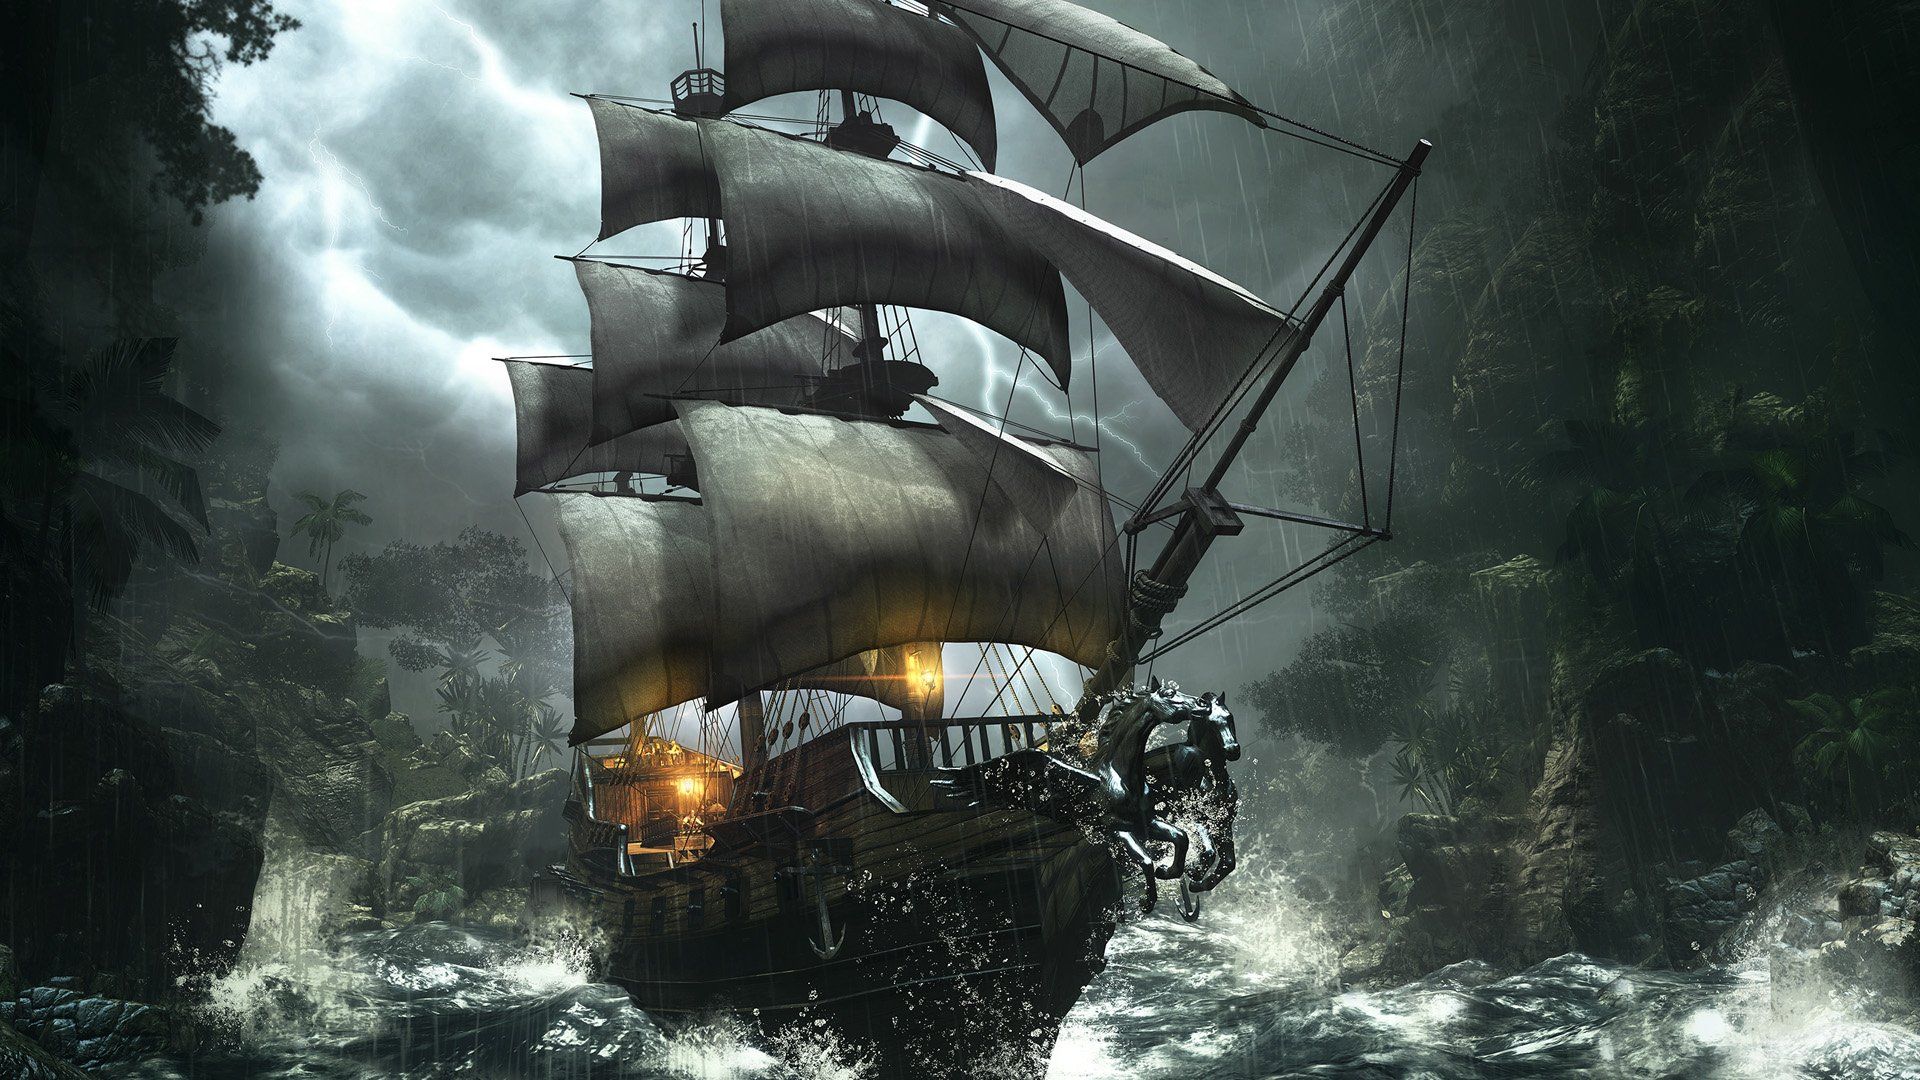 Download Download Pirate Ship Wallpaper Desktop #1Dksc ...